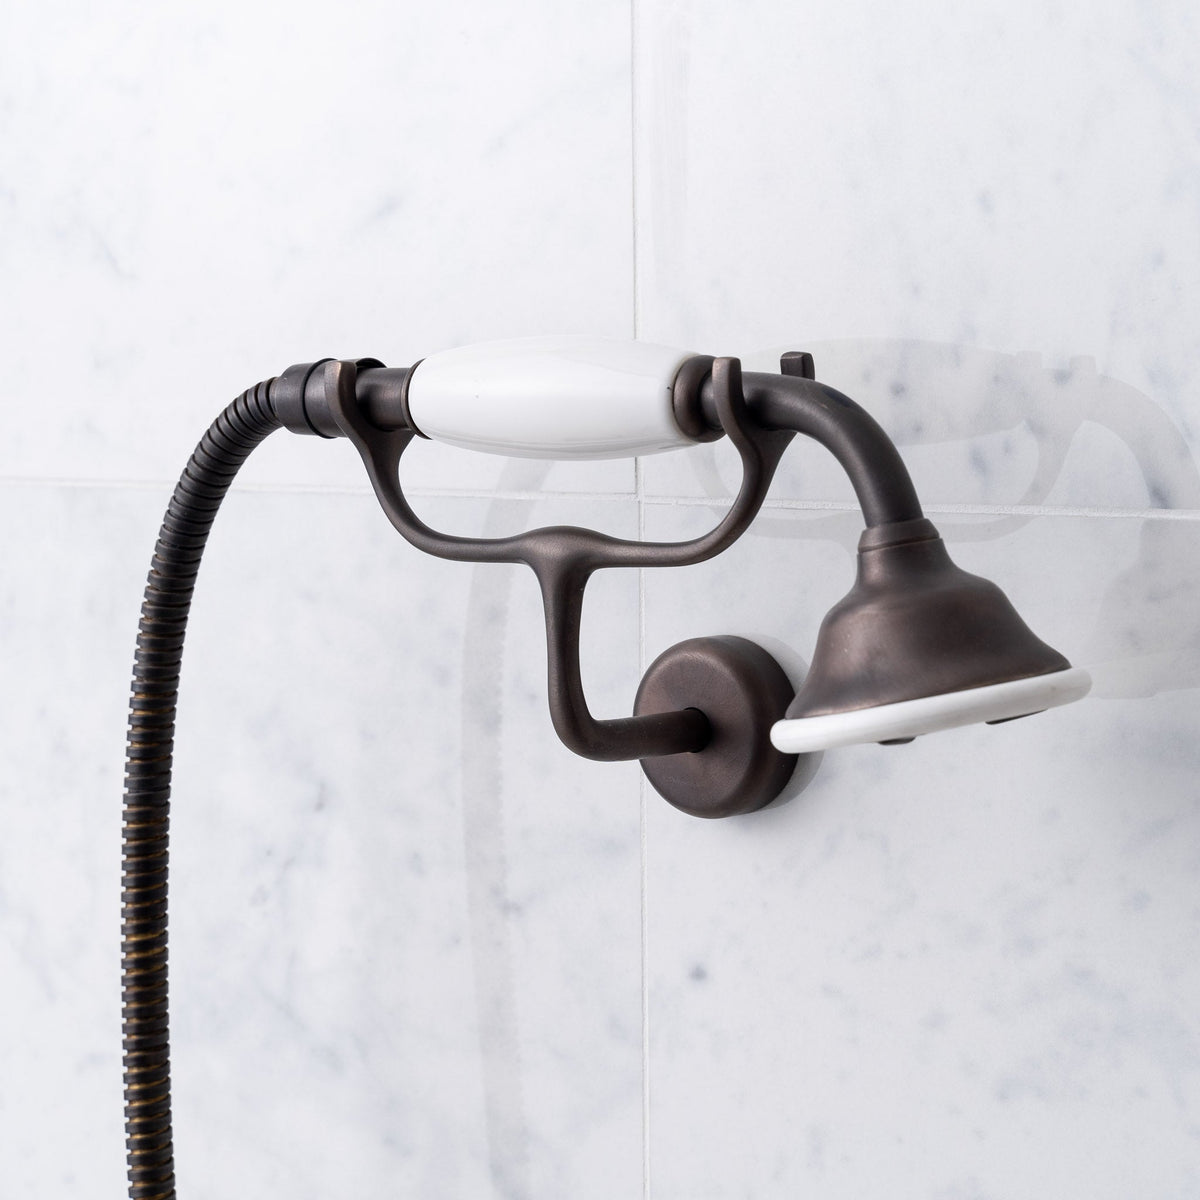 Overton White Ceramic Lever &amp; Cleaver Telephone Handset Exposed Pipe Thermostatic Shower Set - Rutland London (USA)